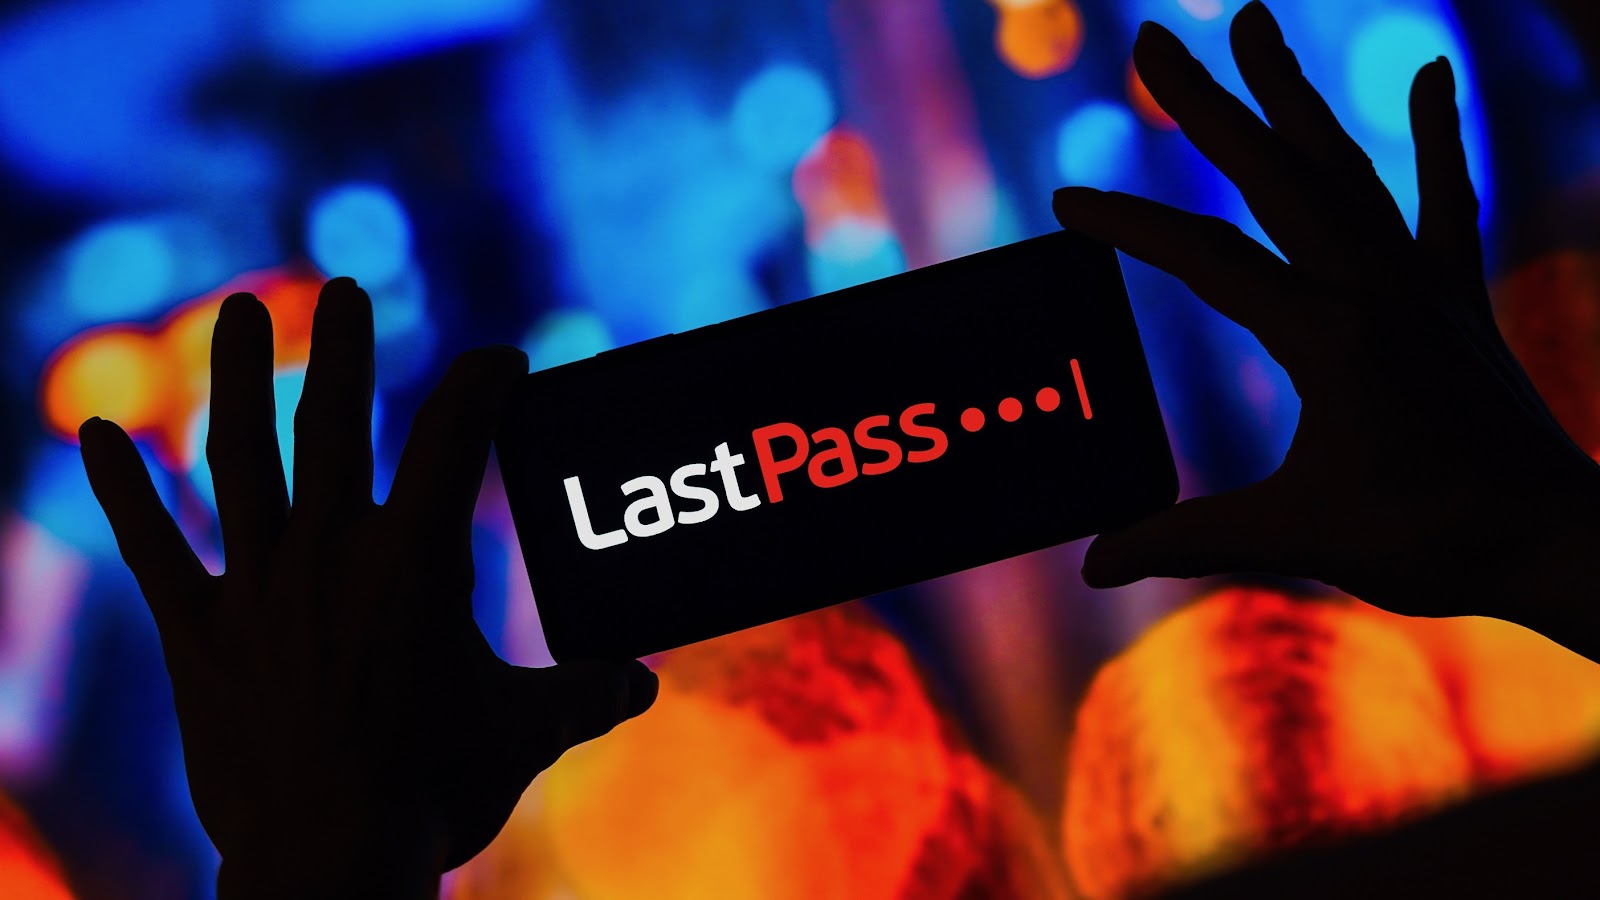 Lastpass Vs Google Password Manager: The Ultimate Showdown